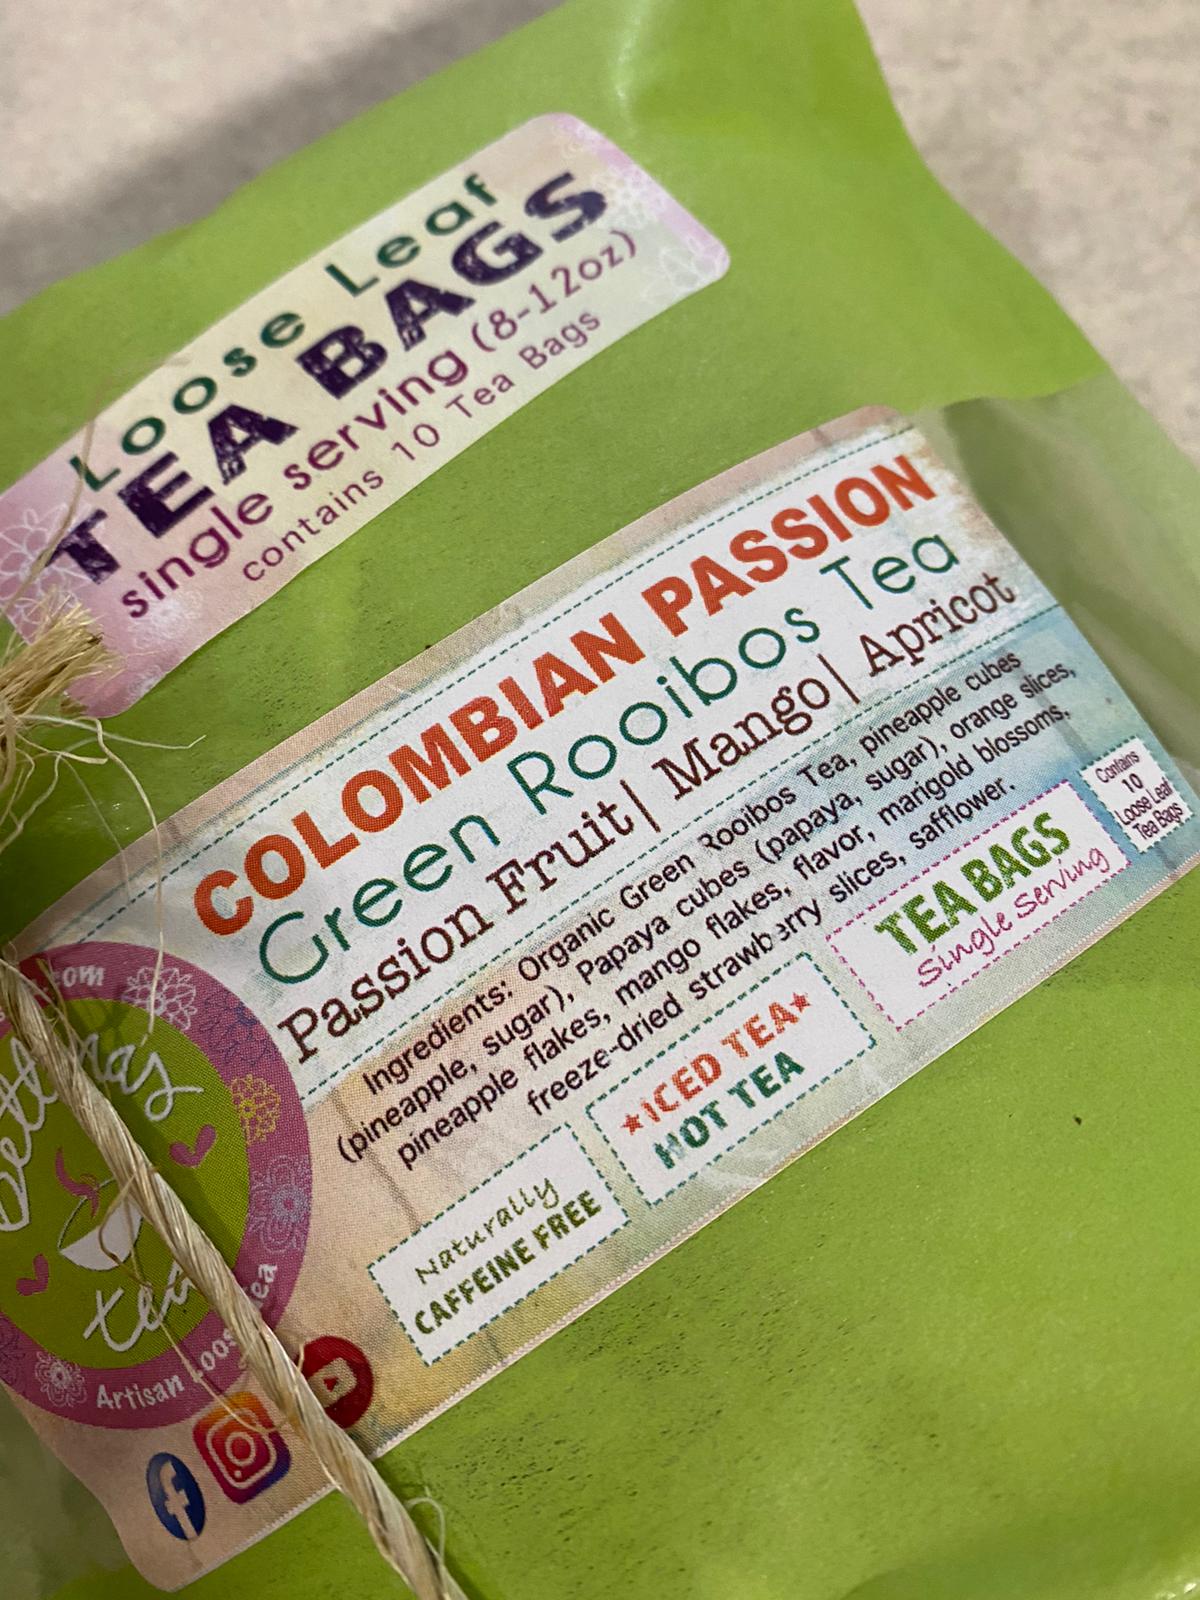 Colombian Passion - Gallon Tea Bags